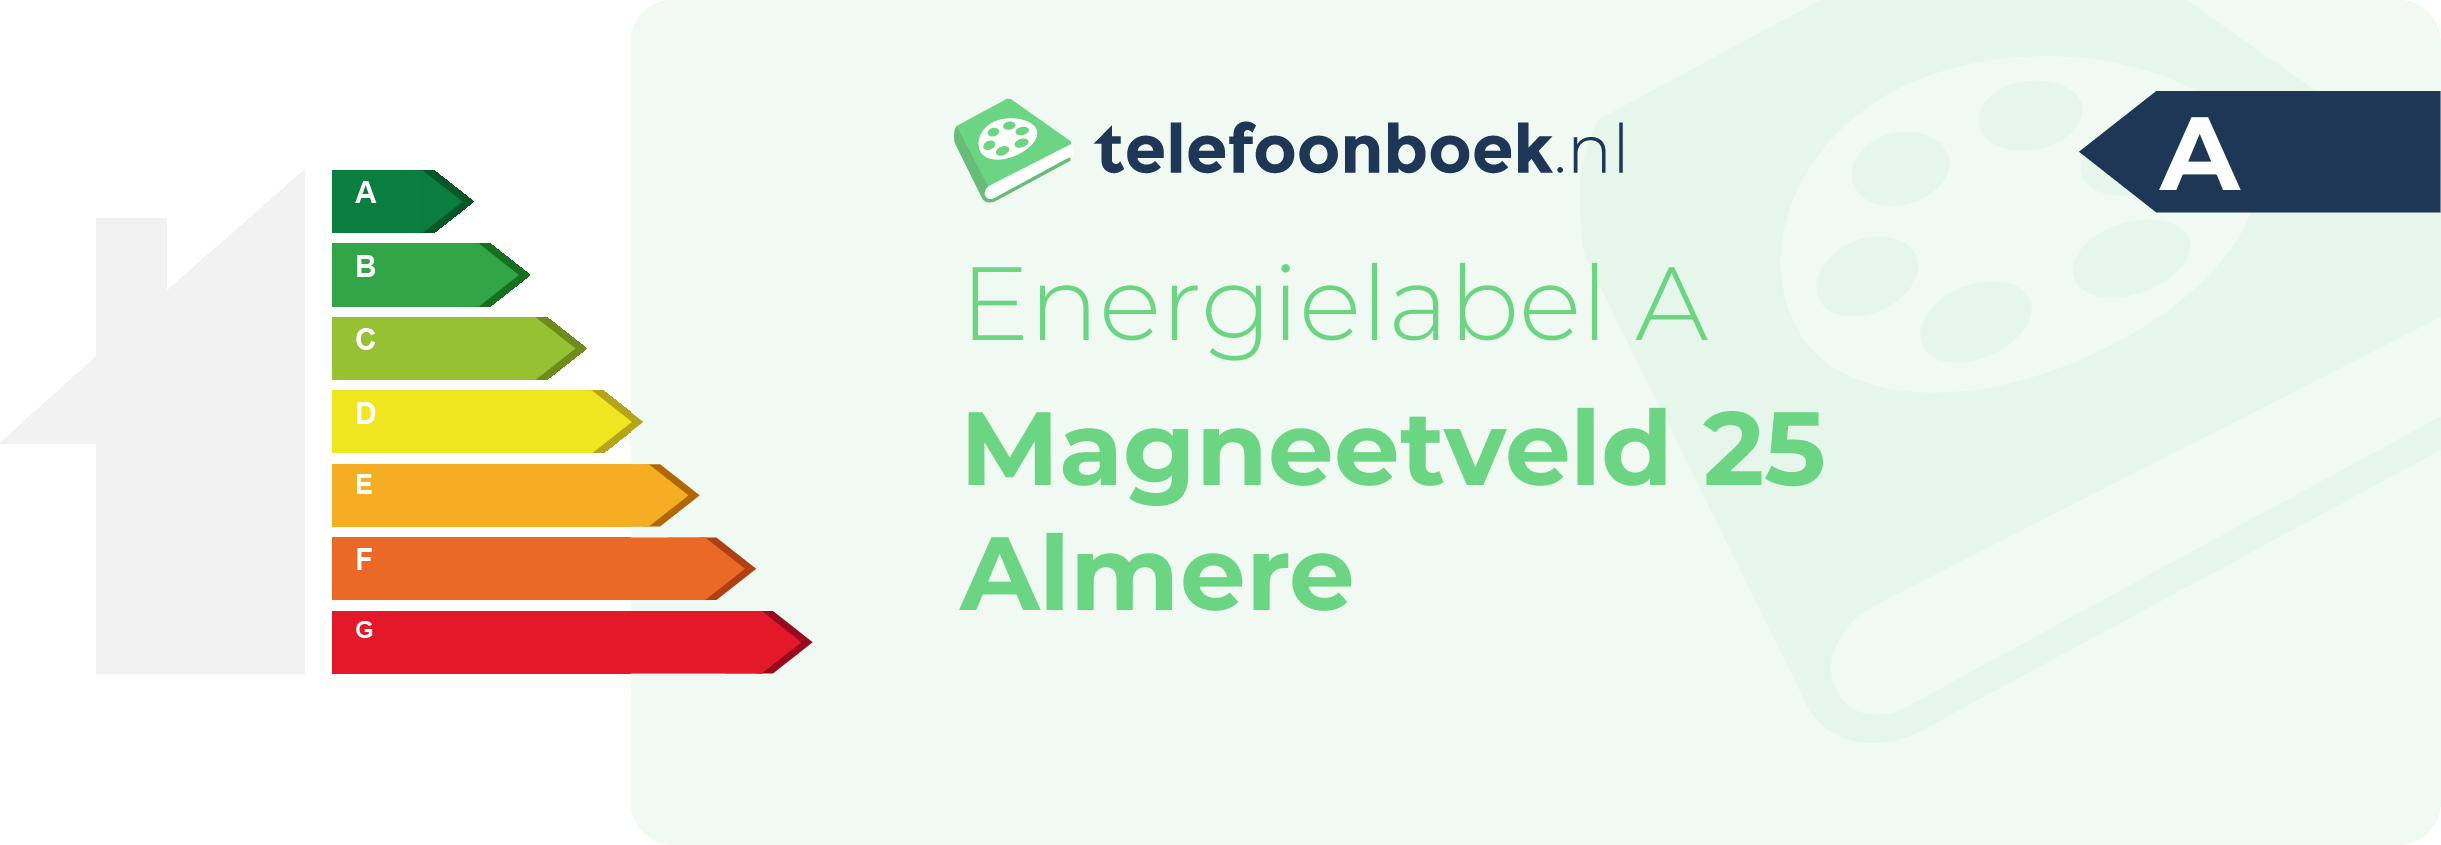 Energielabel Magneetveld 25 Almere